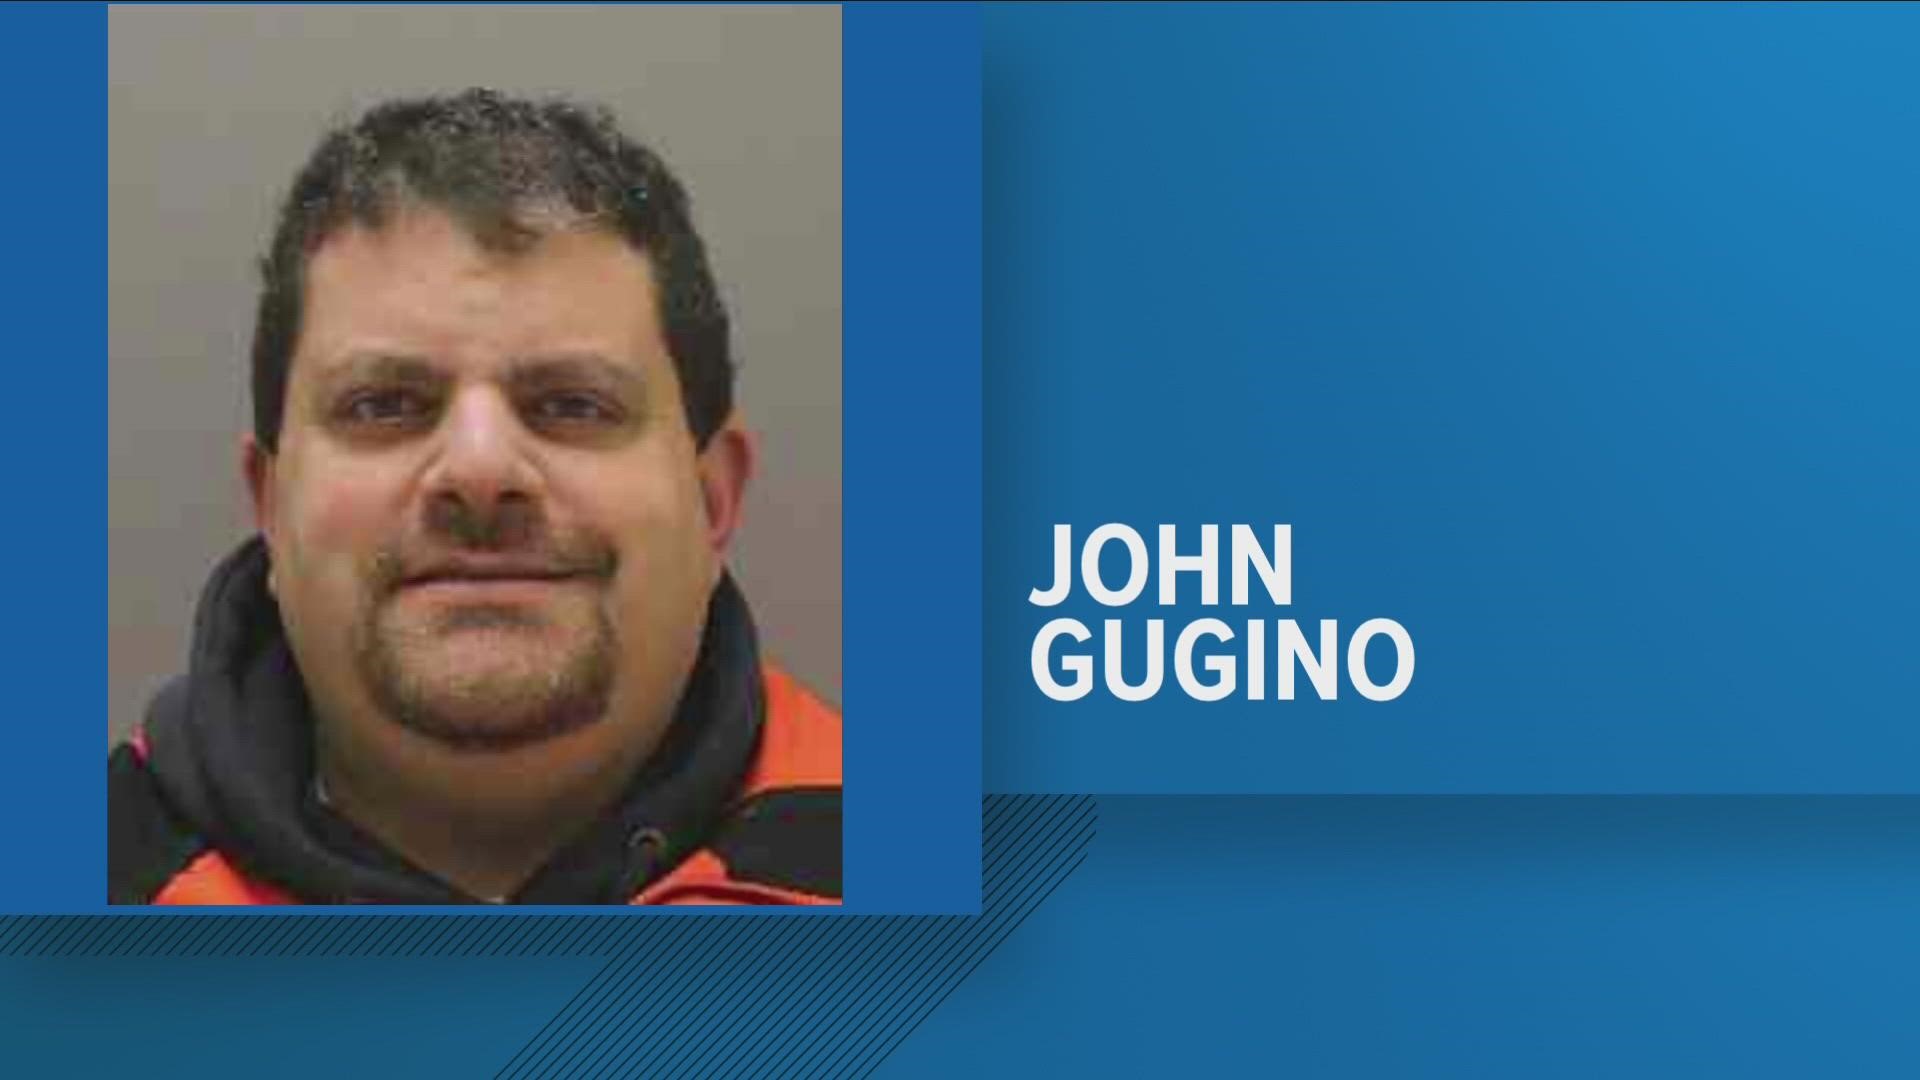 John Gugino arraigned on criminal trespass charges